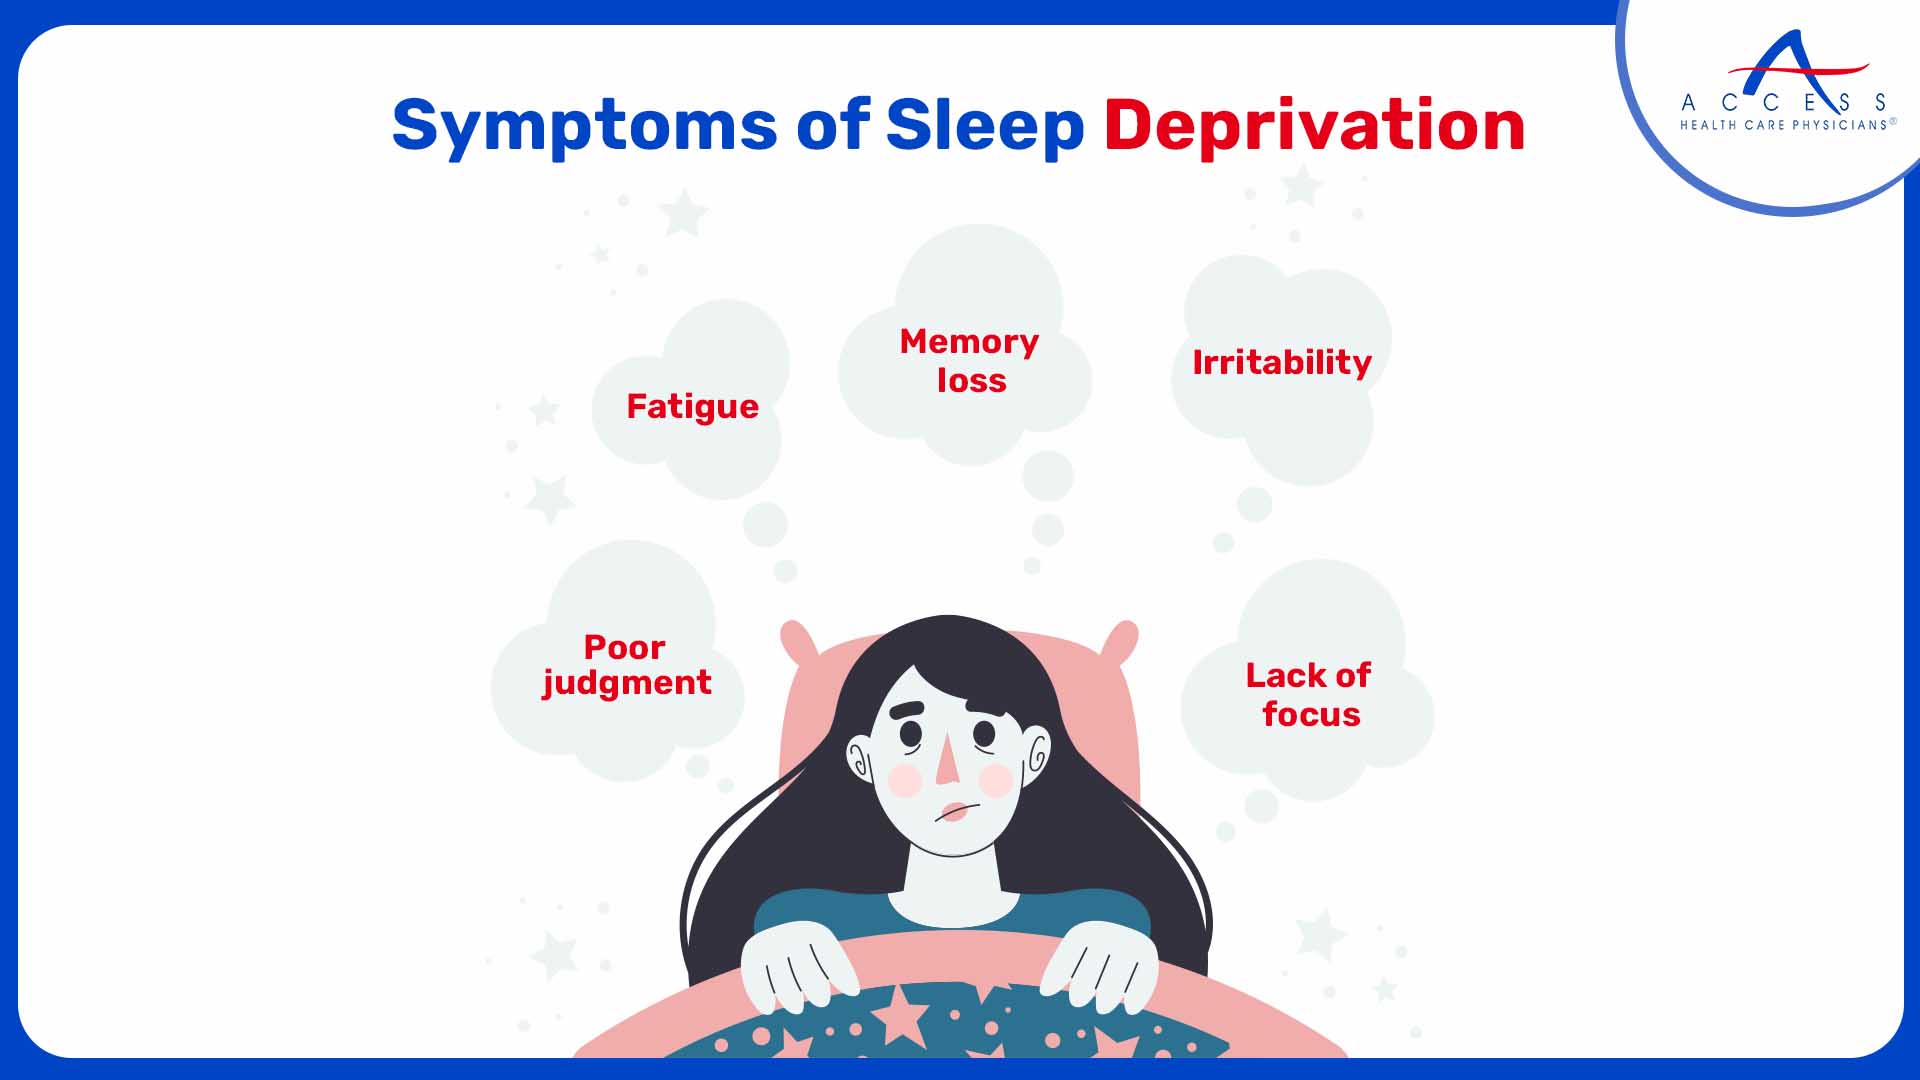 Symptoms of sleep deprivation